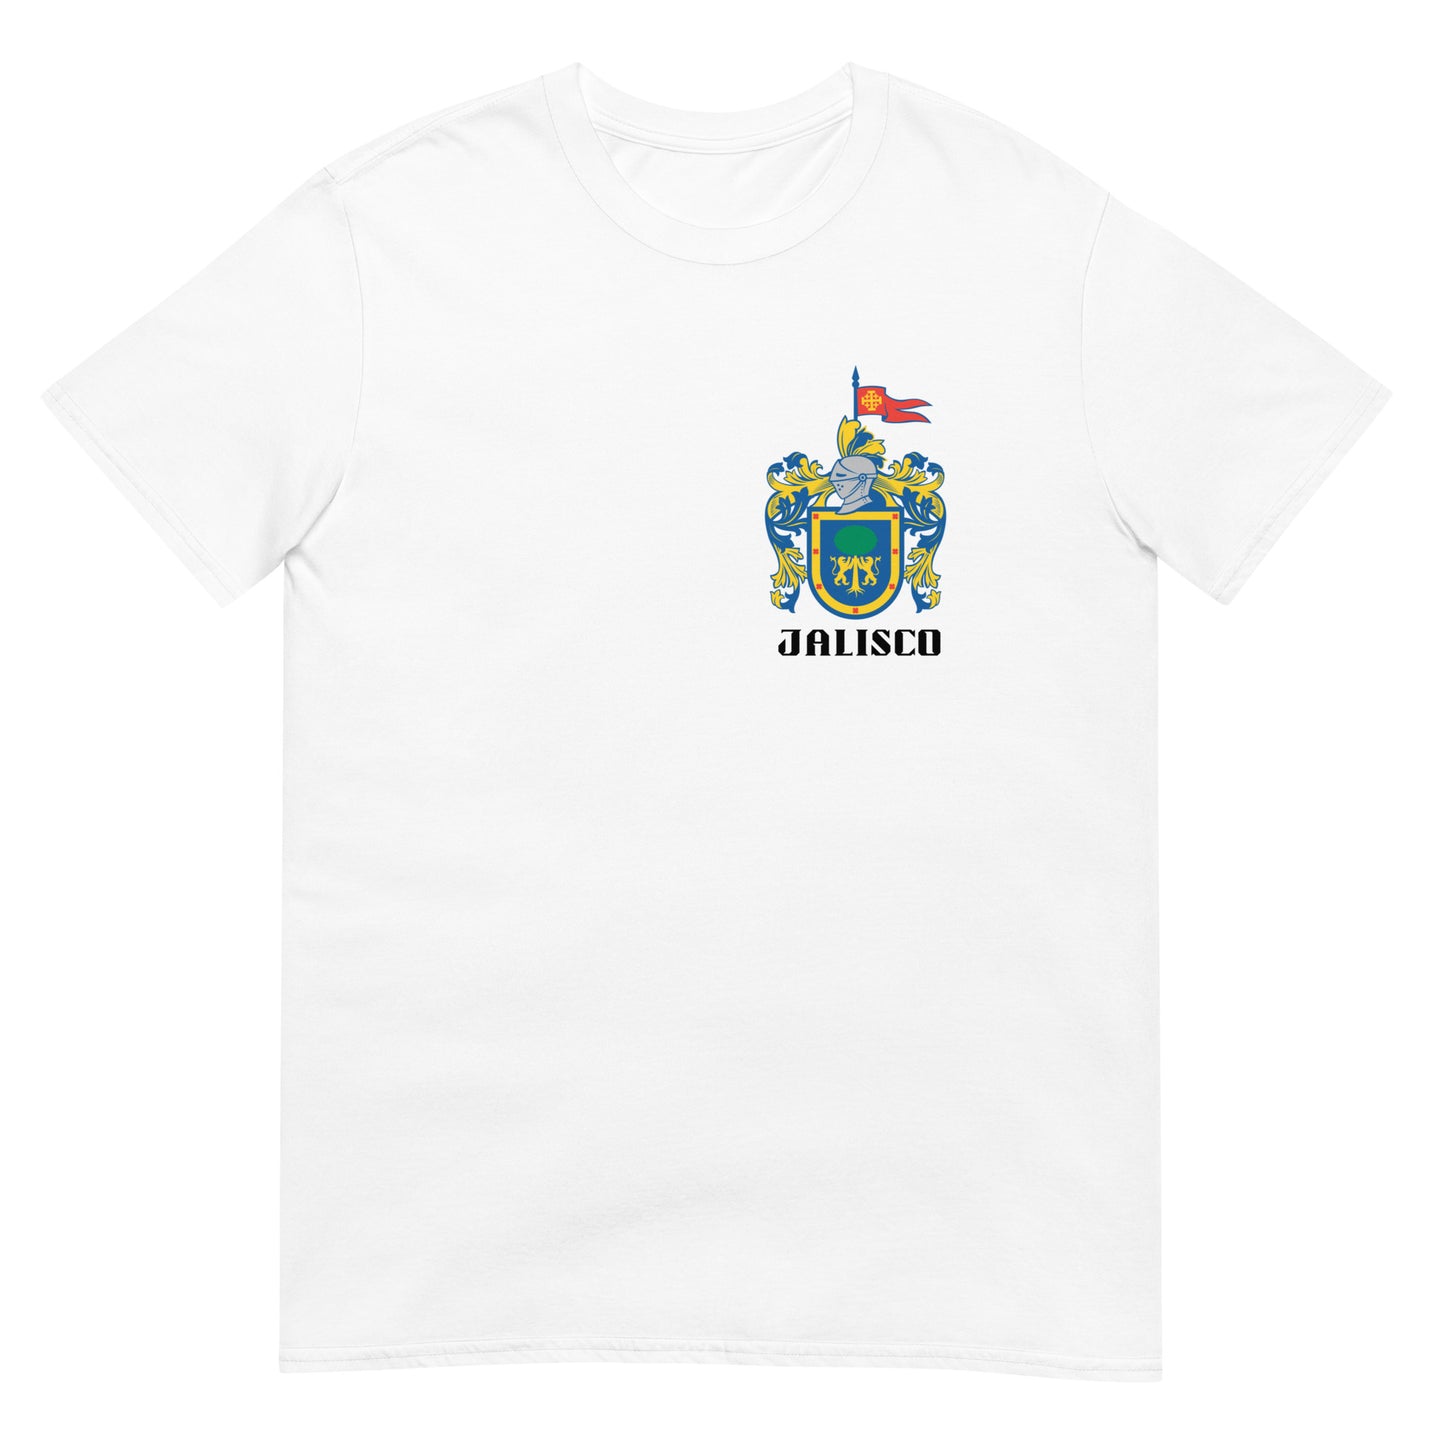 Jalisco- T-Shirt